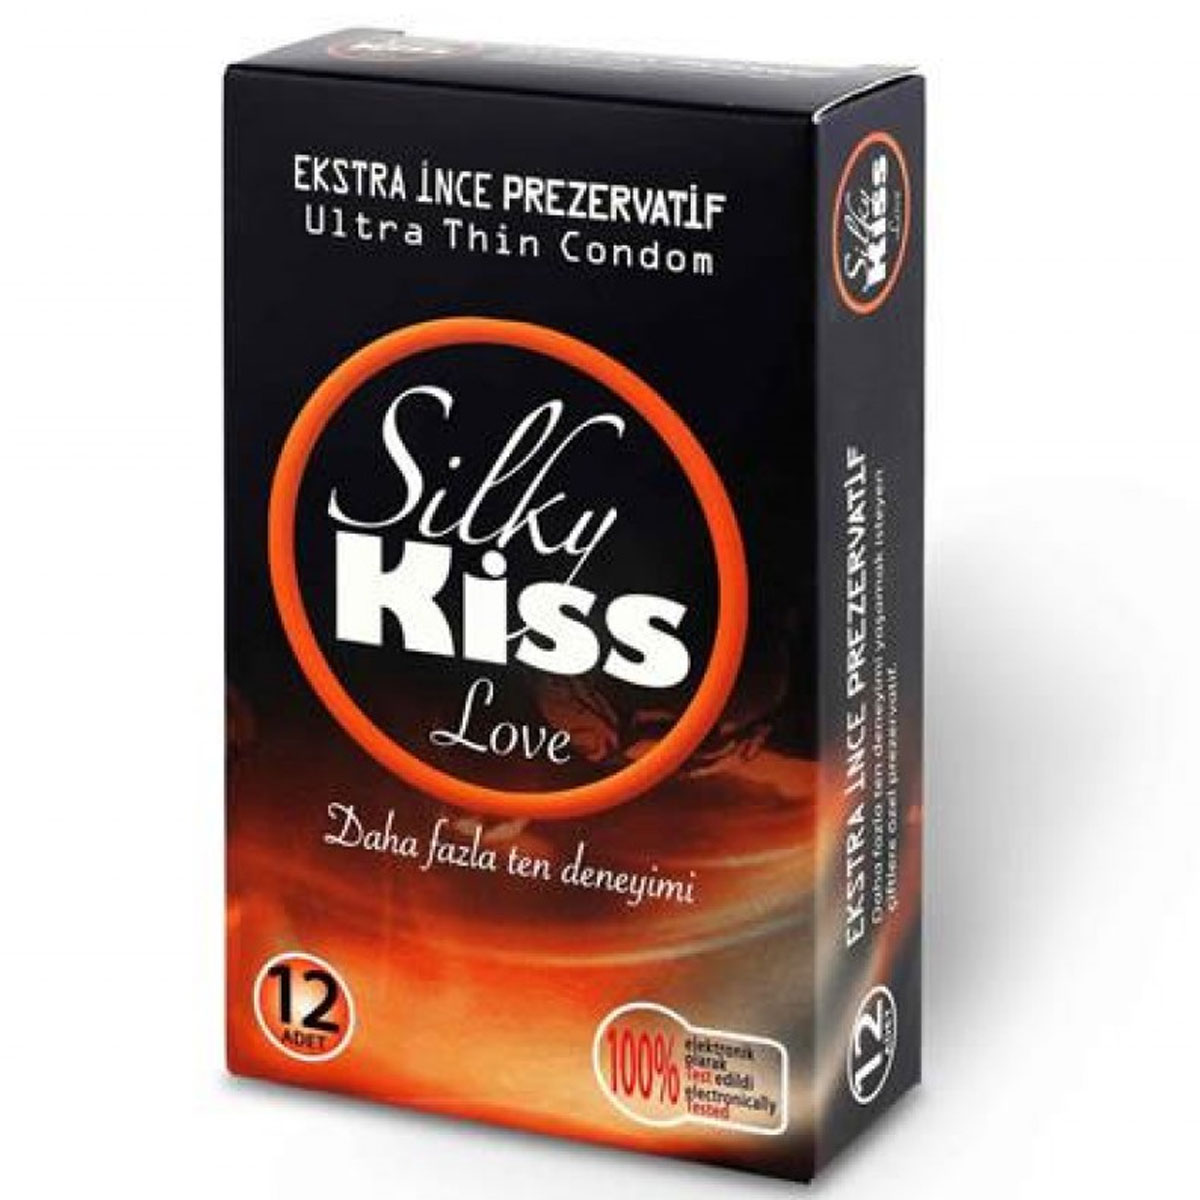 Silky Kiss Ultra Ince Prezervatif C-1572